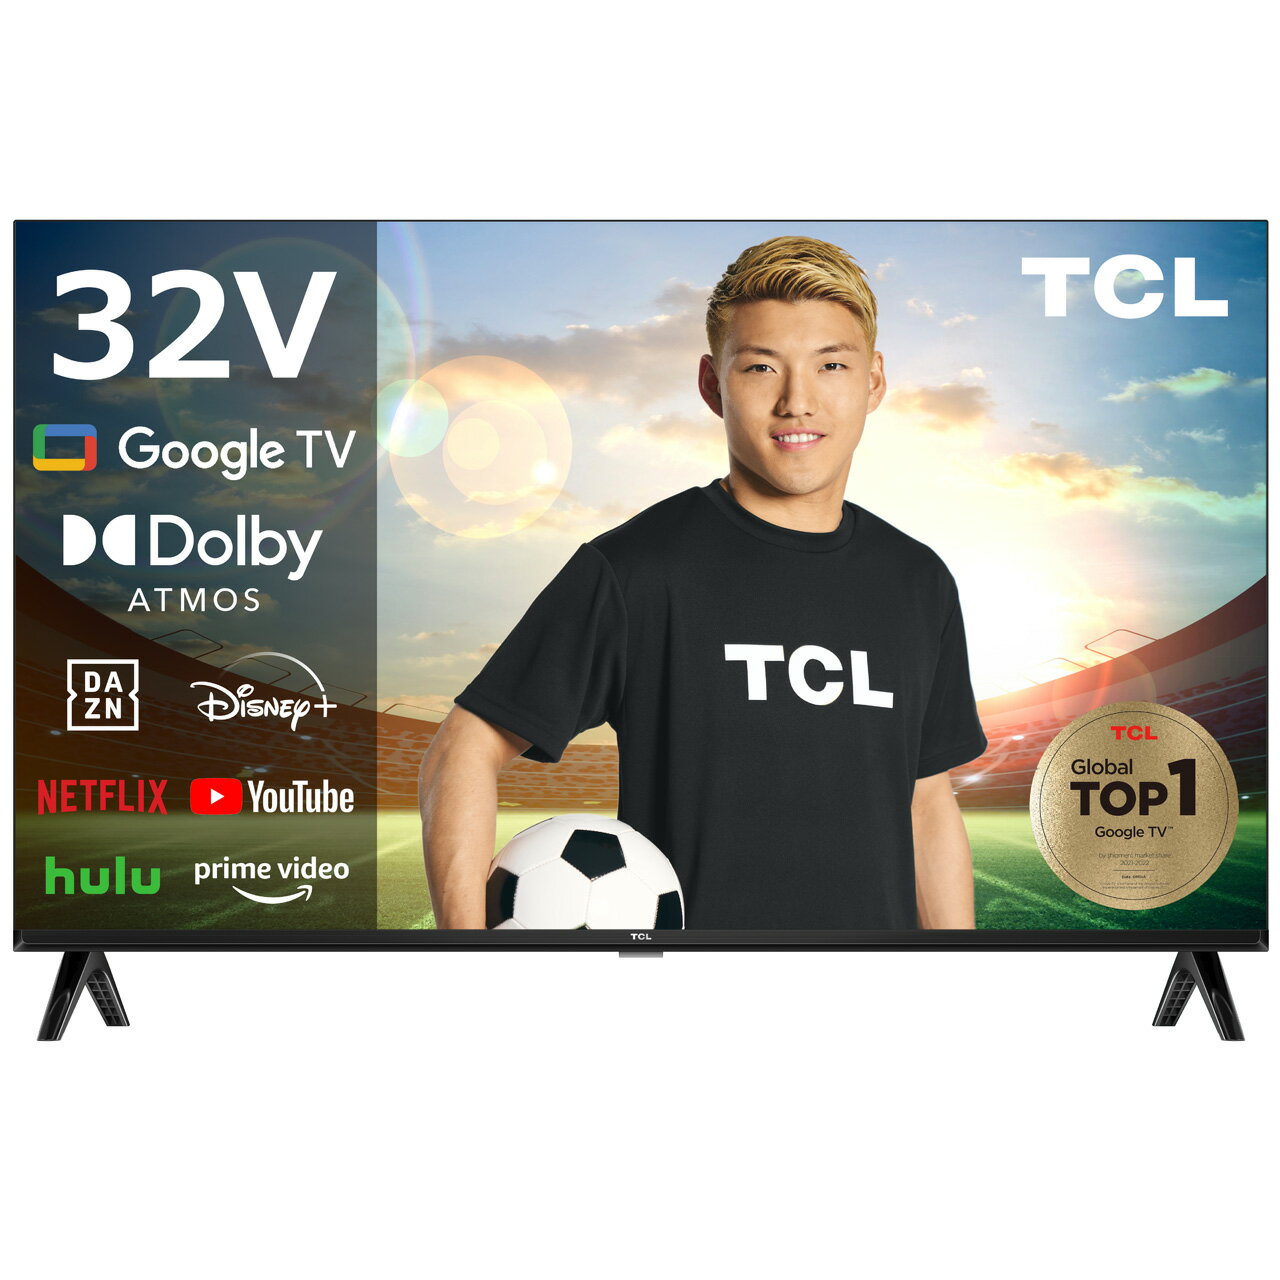 FHDスマートテレビ outube Amazonプライム NETFLIX Hulu対応 TCL 32S5400 32V型 フルハイビジョン液晶テレビ Google TV搭載